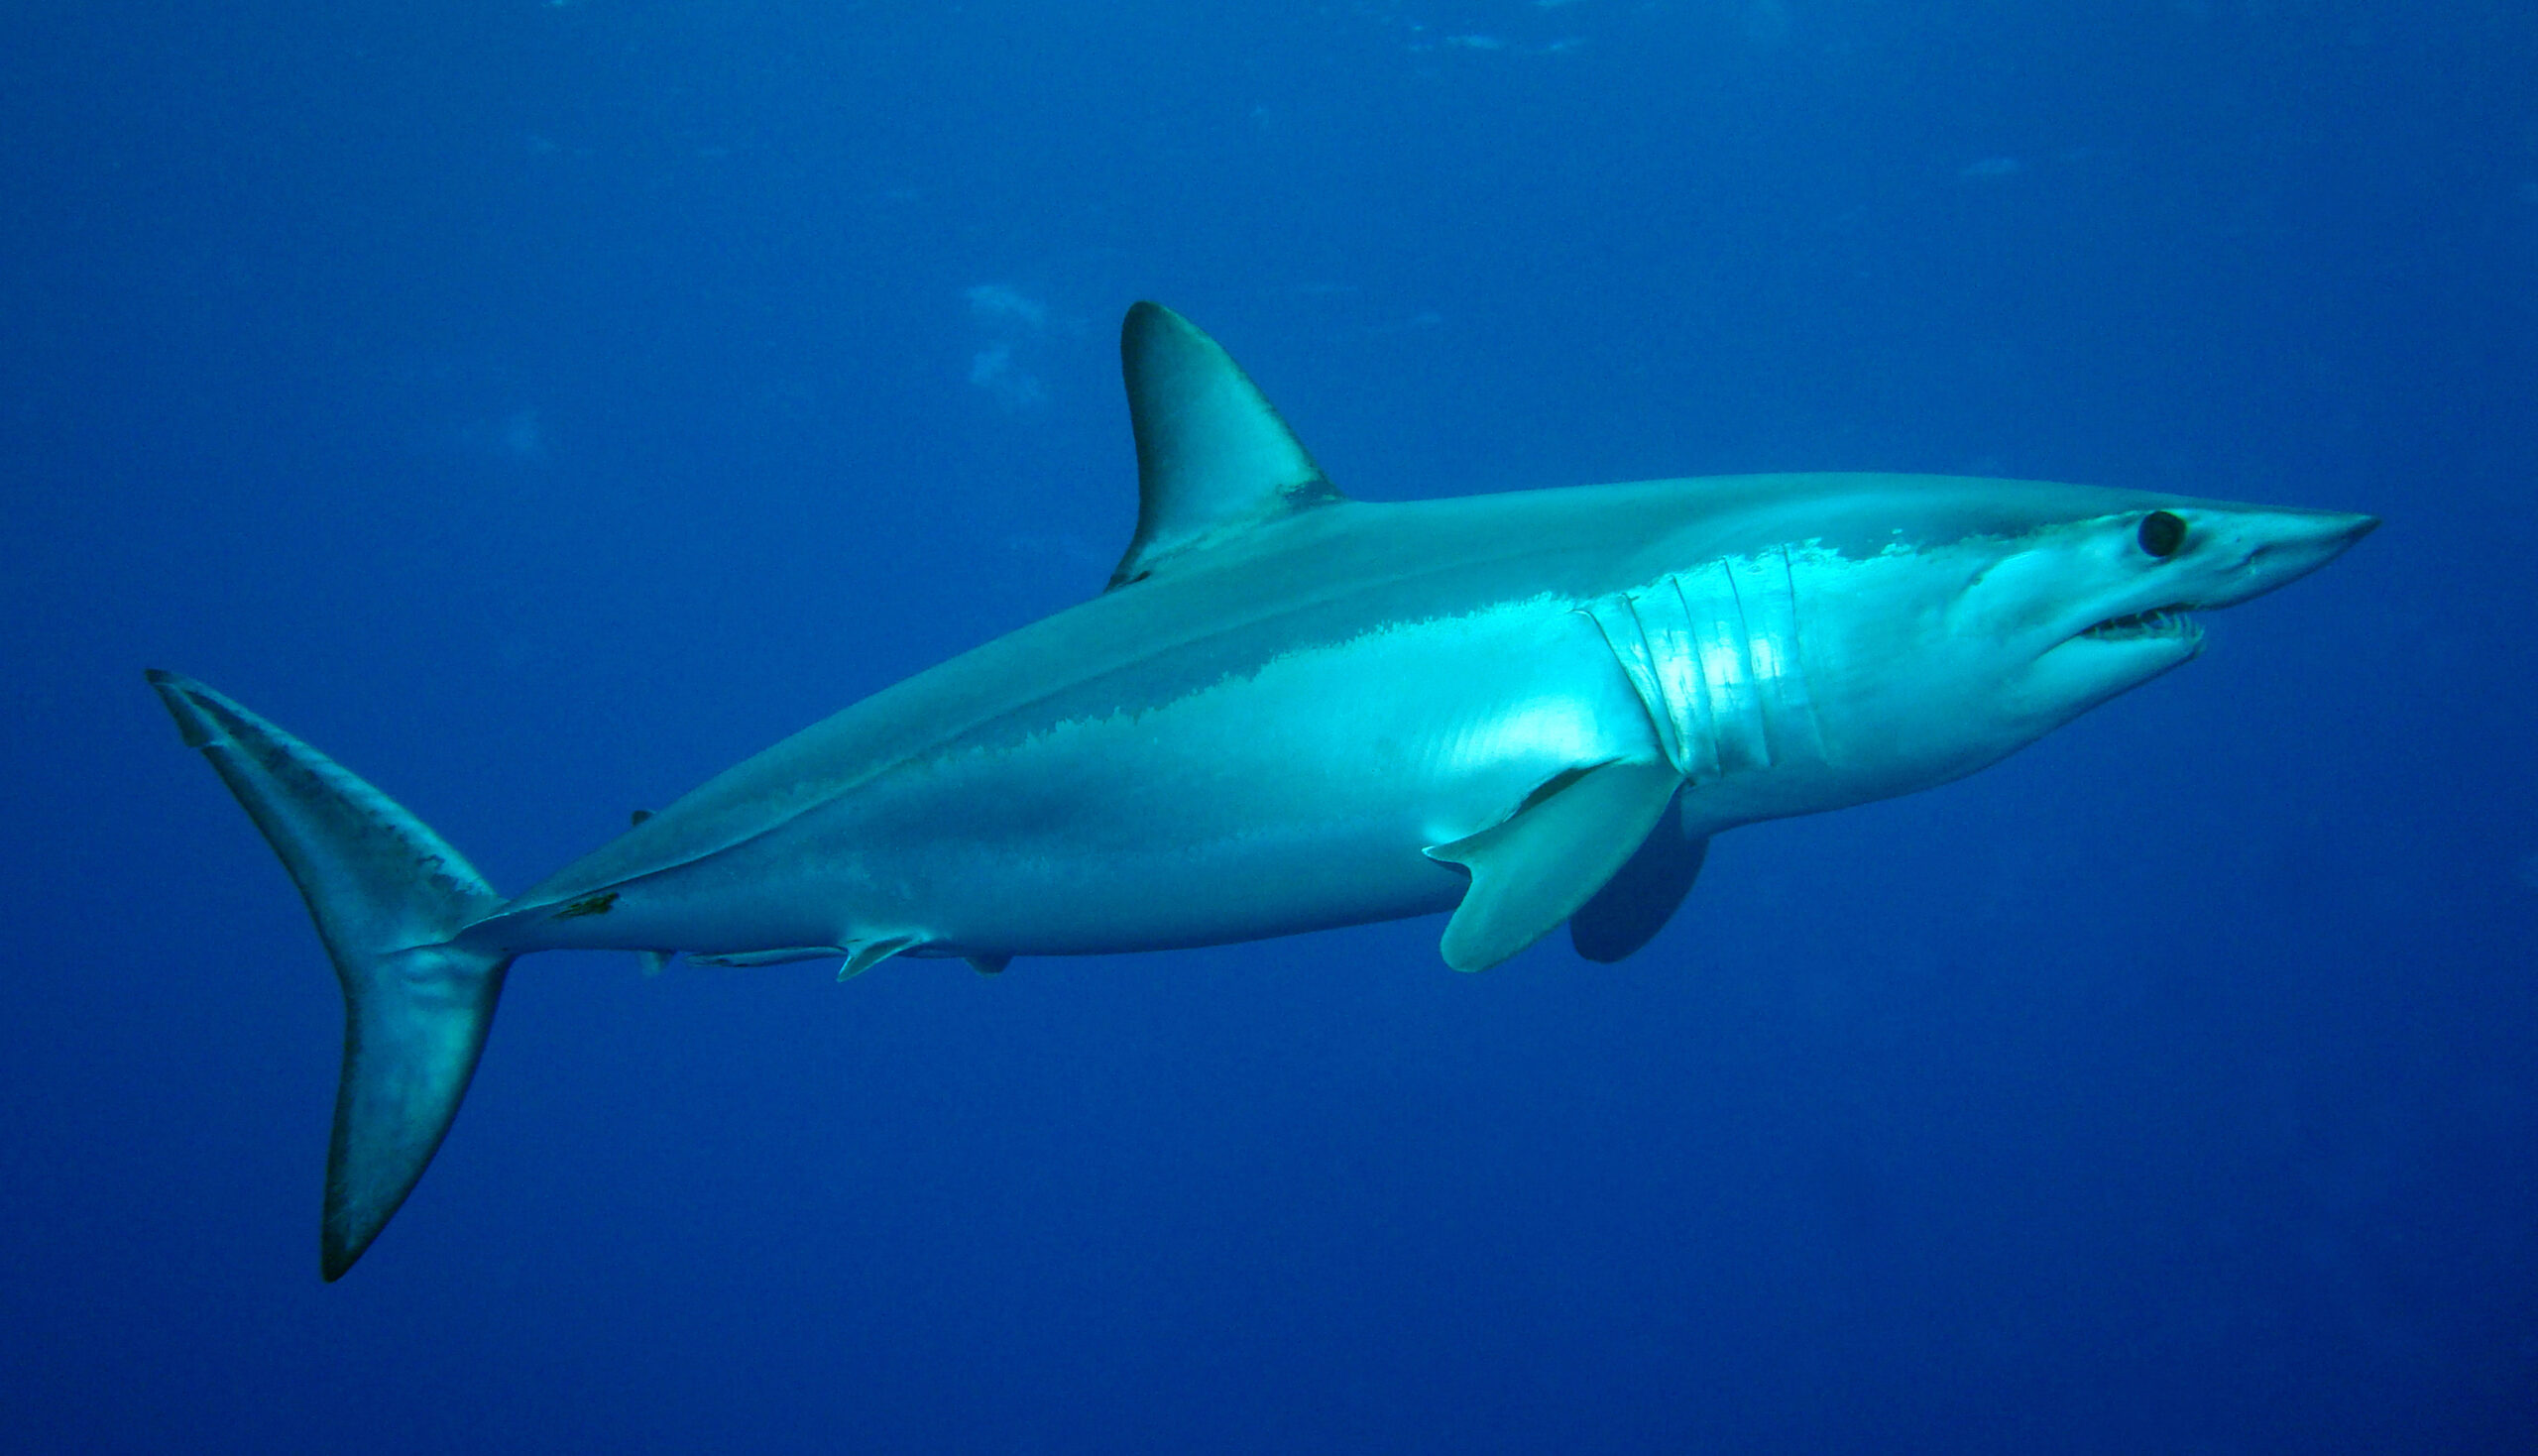 Despite U.S. Opposition, Mako Sharks Win Protections at International Wildlife Treaty Meeting